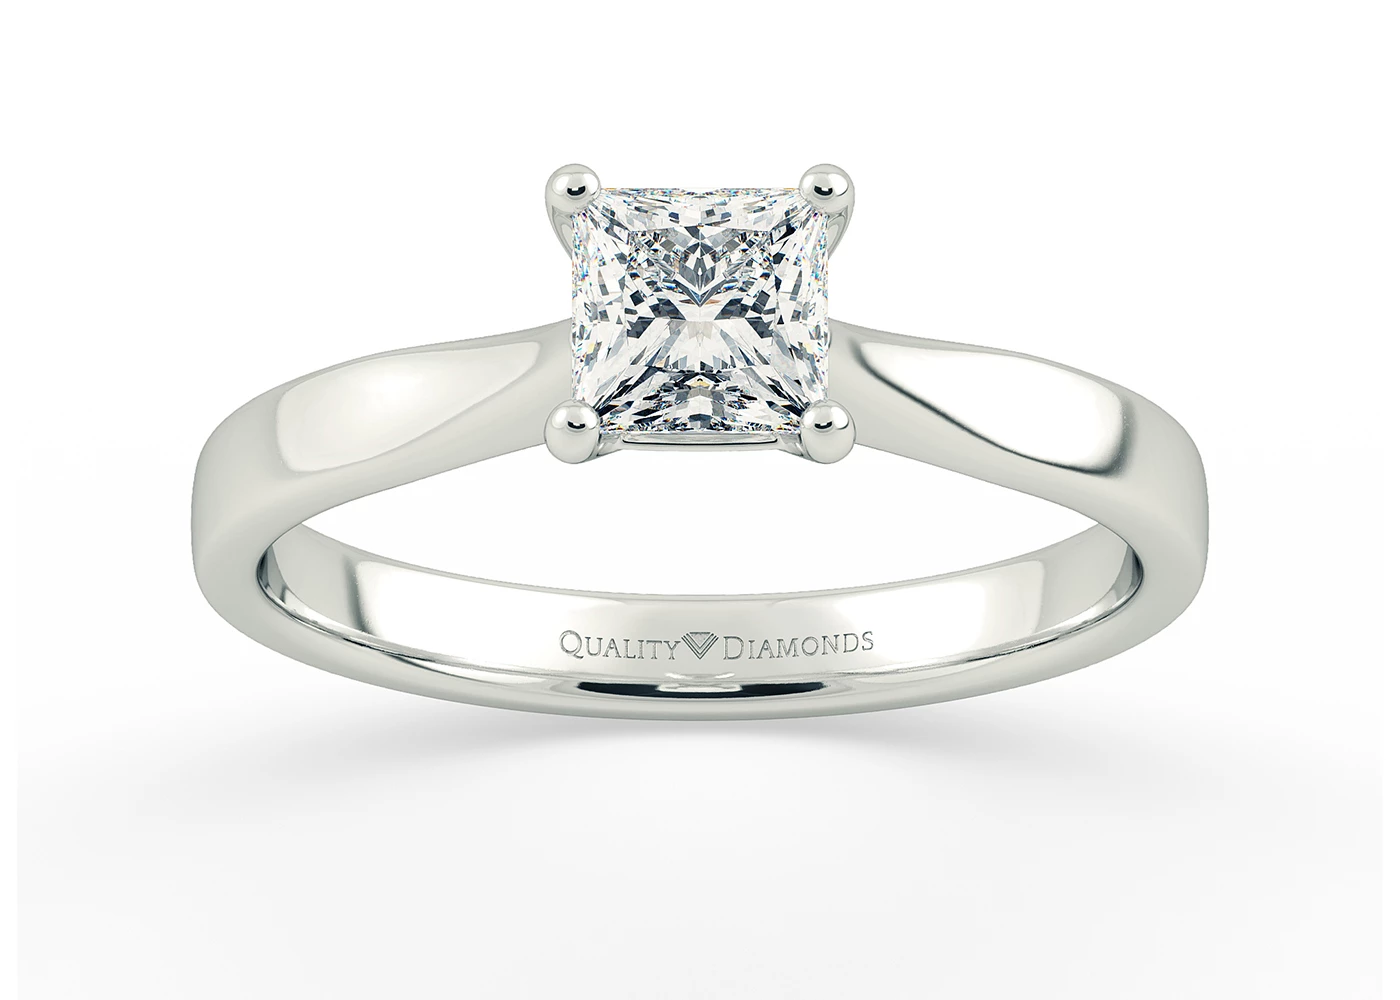 Princess Beau Diamond Ring in 18K White Gold